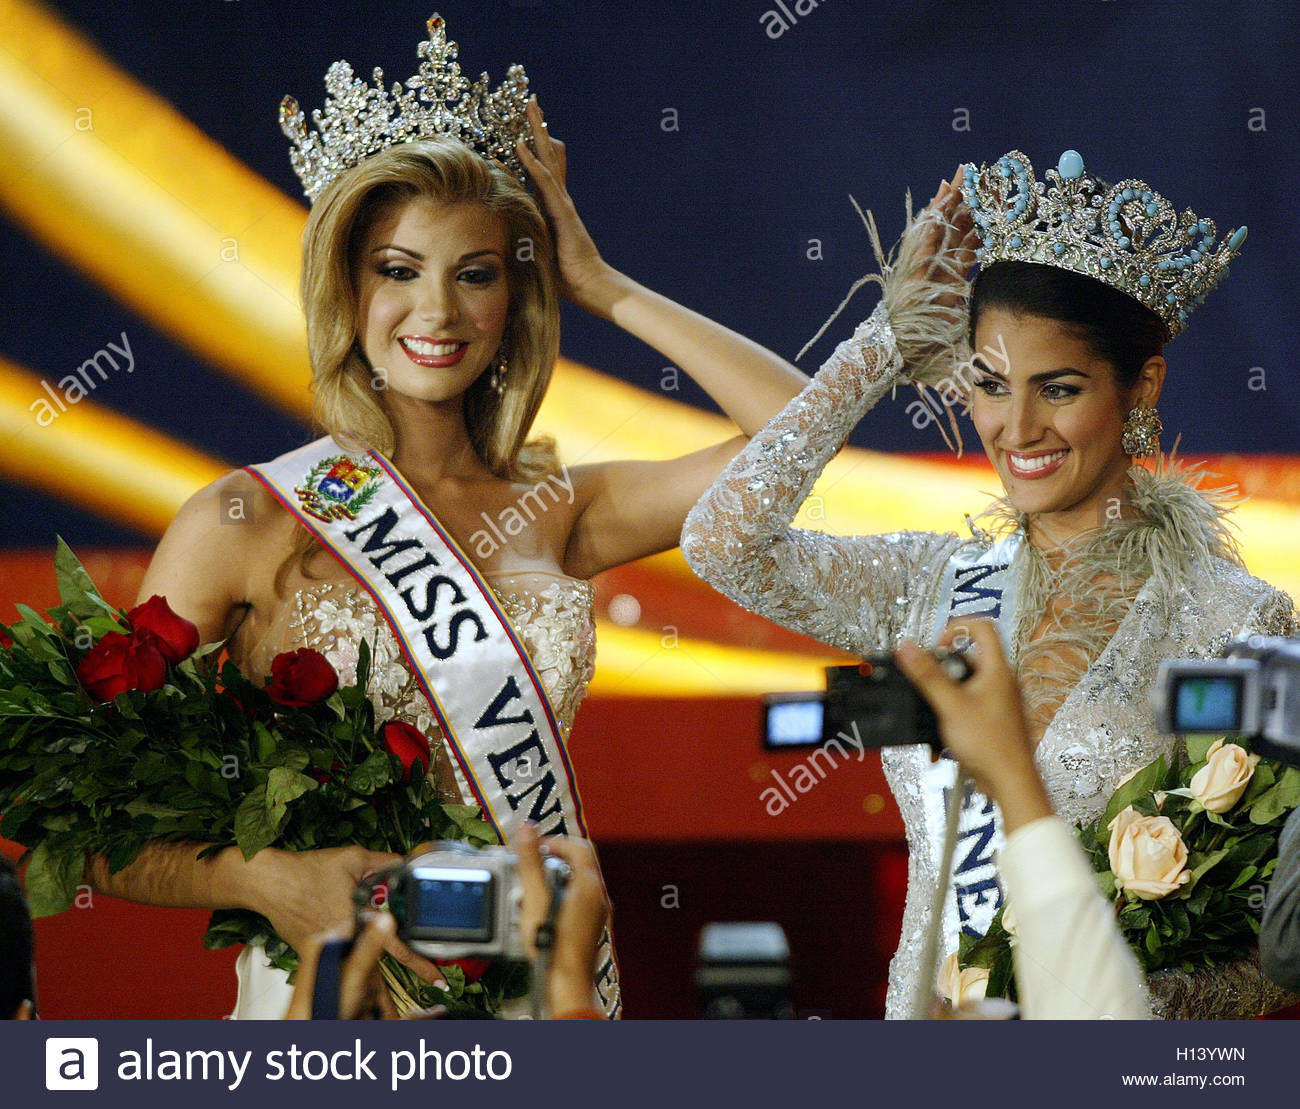 valentina patruno, semifinalista de miss world 2003. Ana-ka10